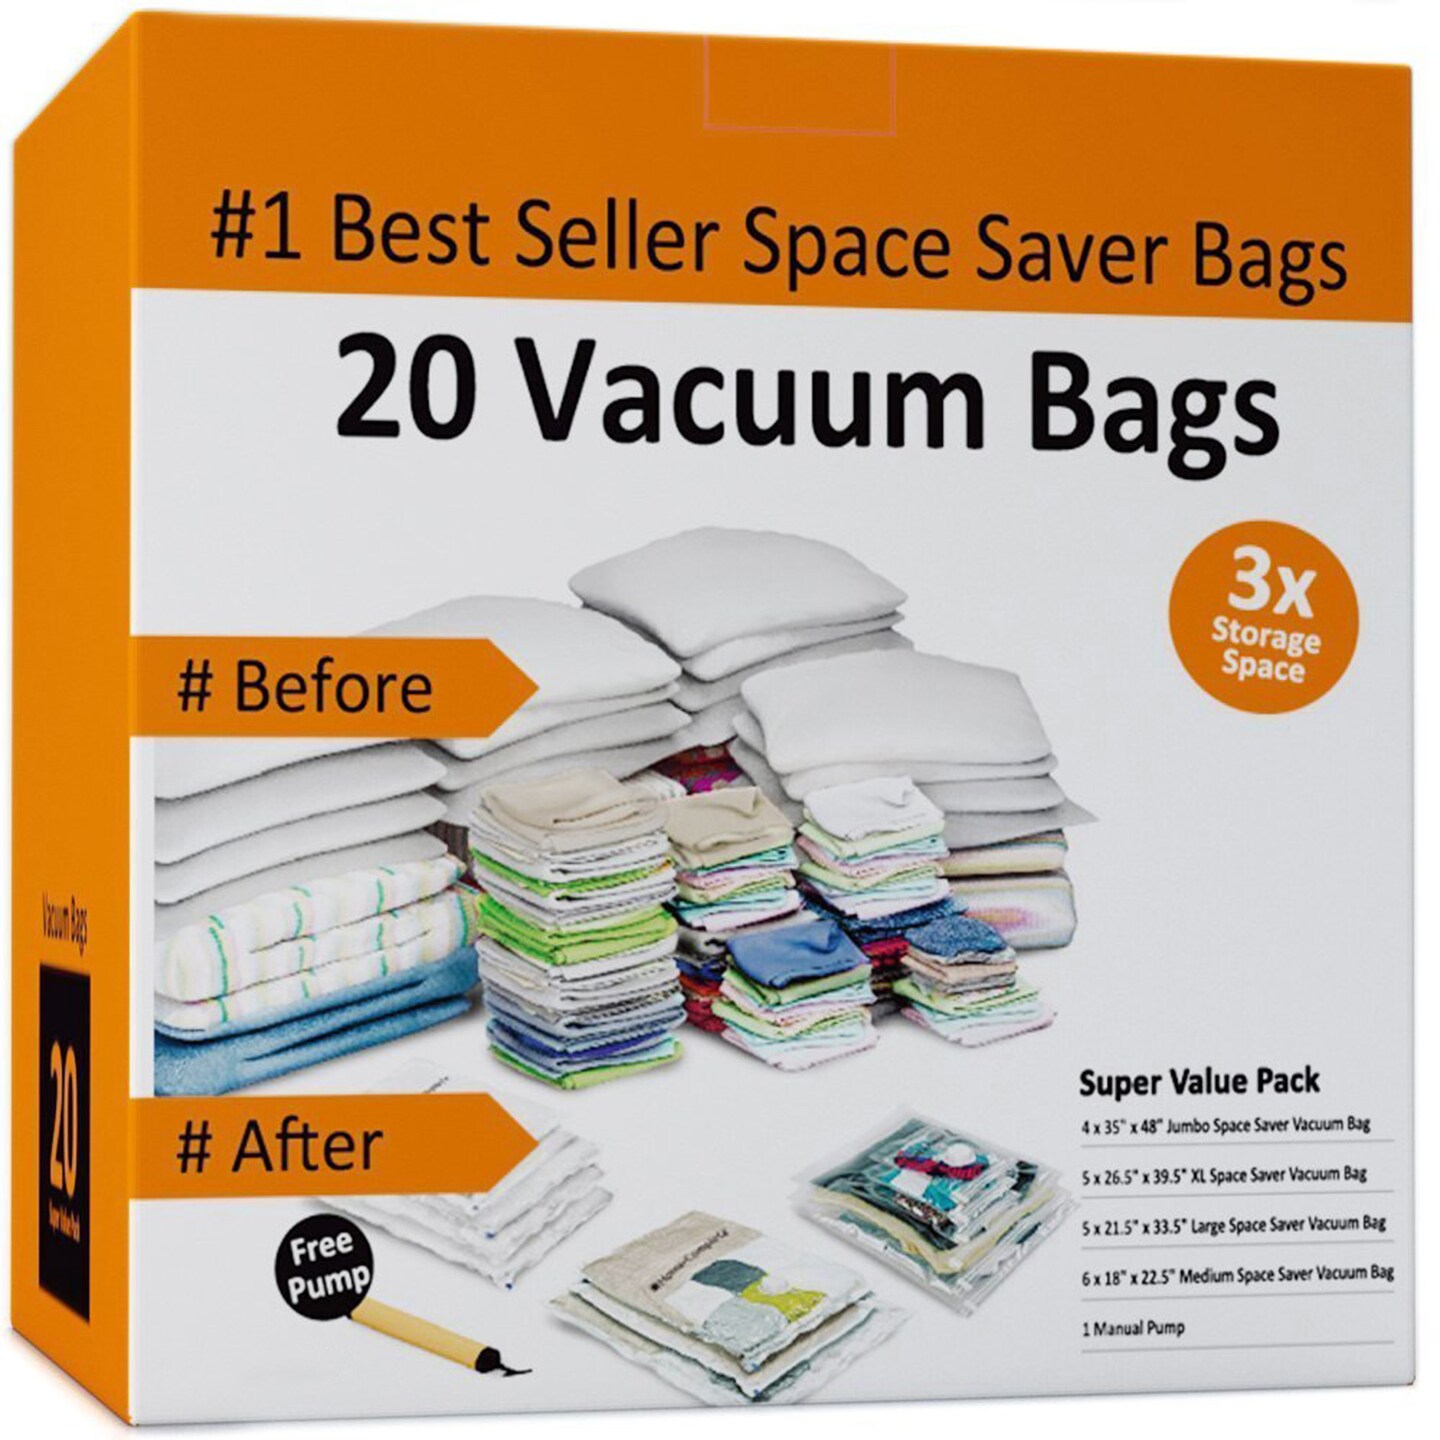 Space Saver Vacuum Seal Storage Bags.